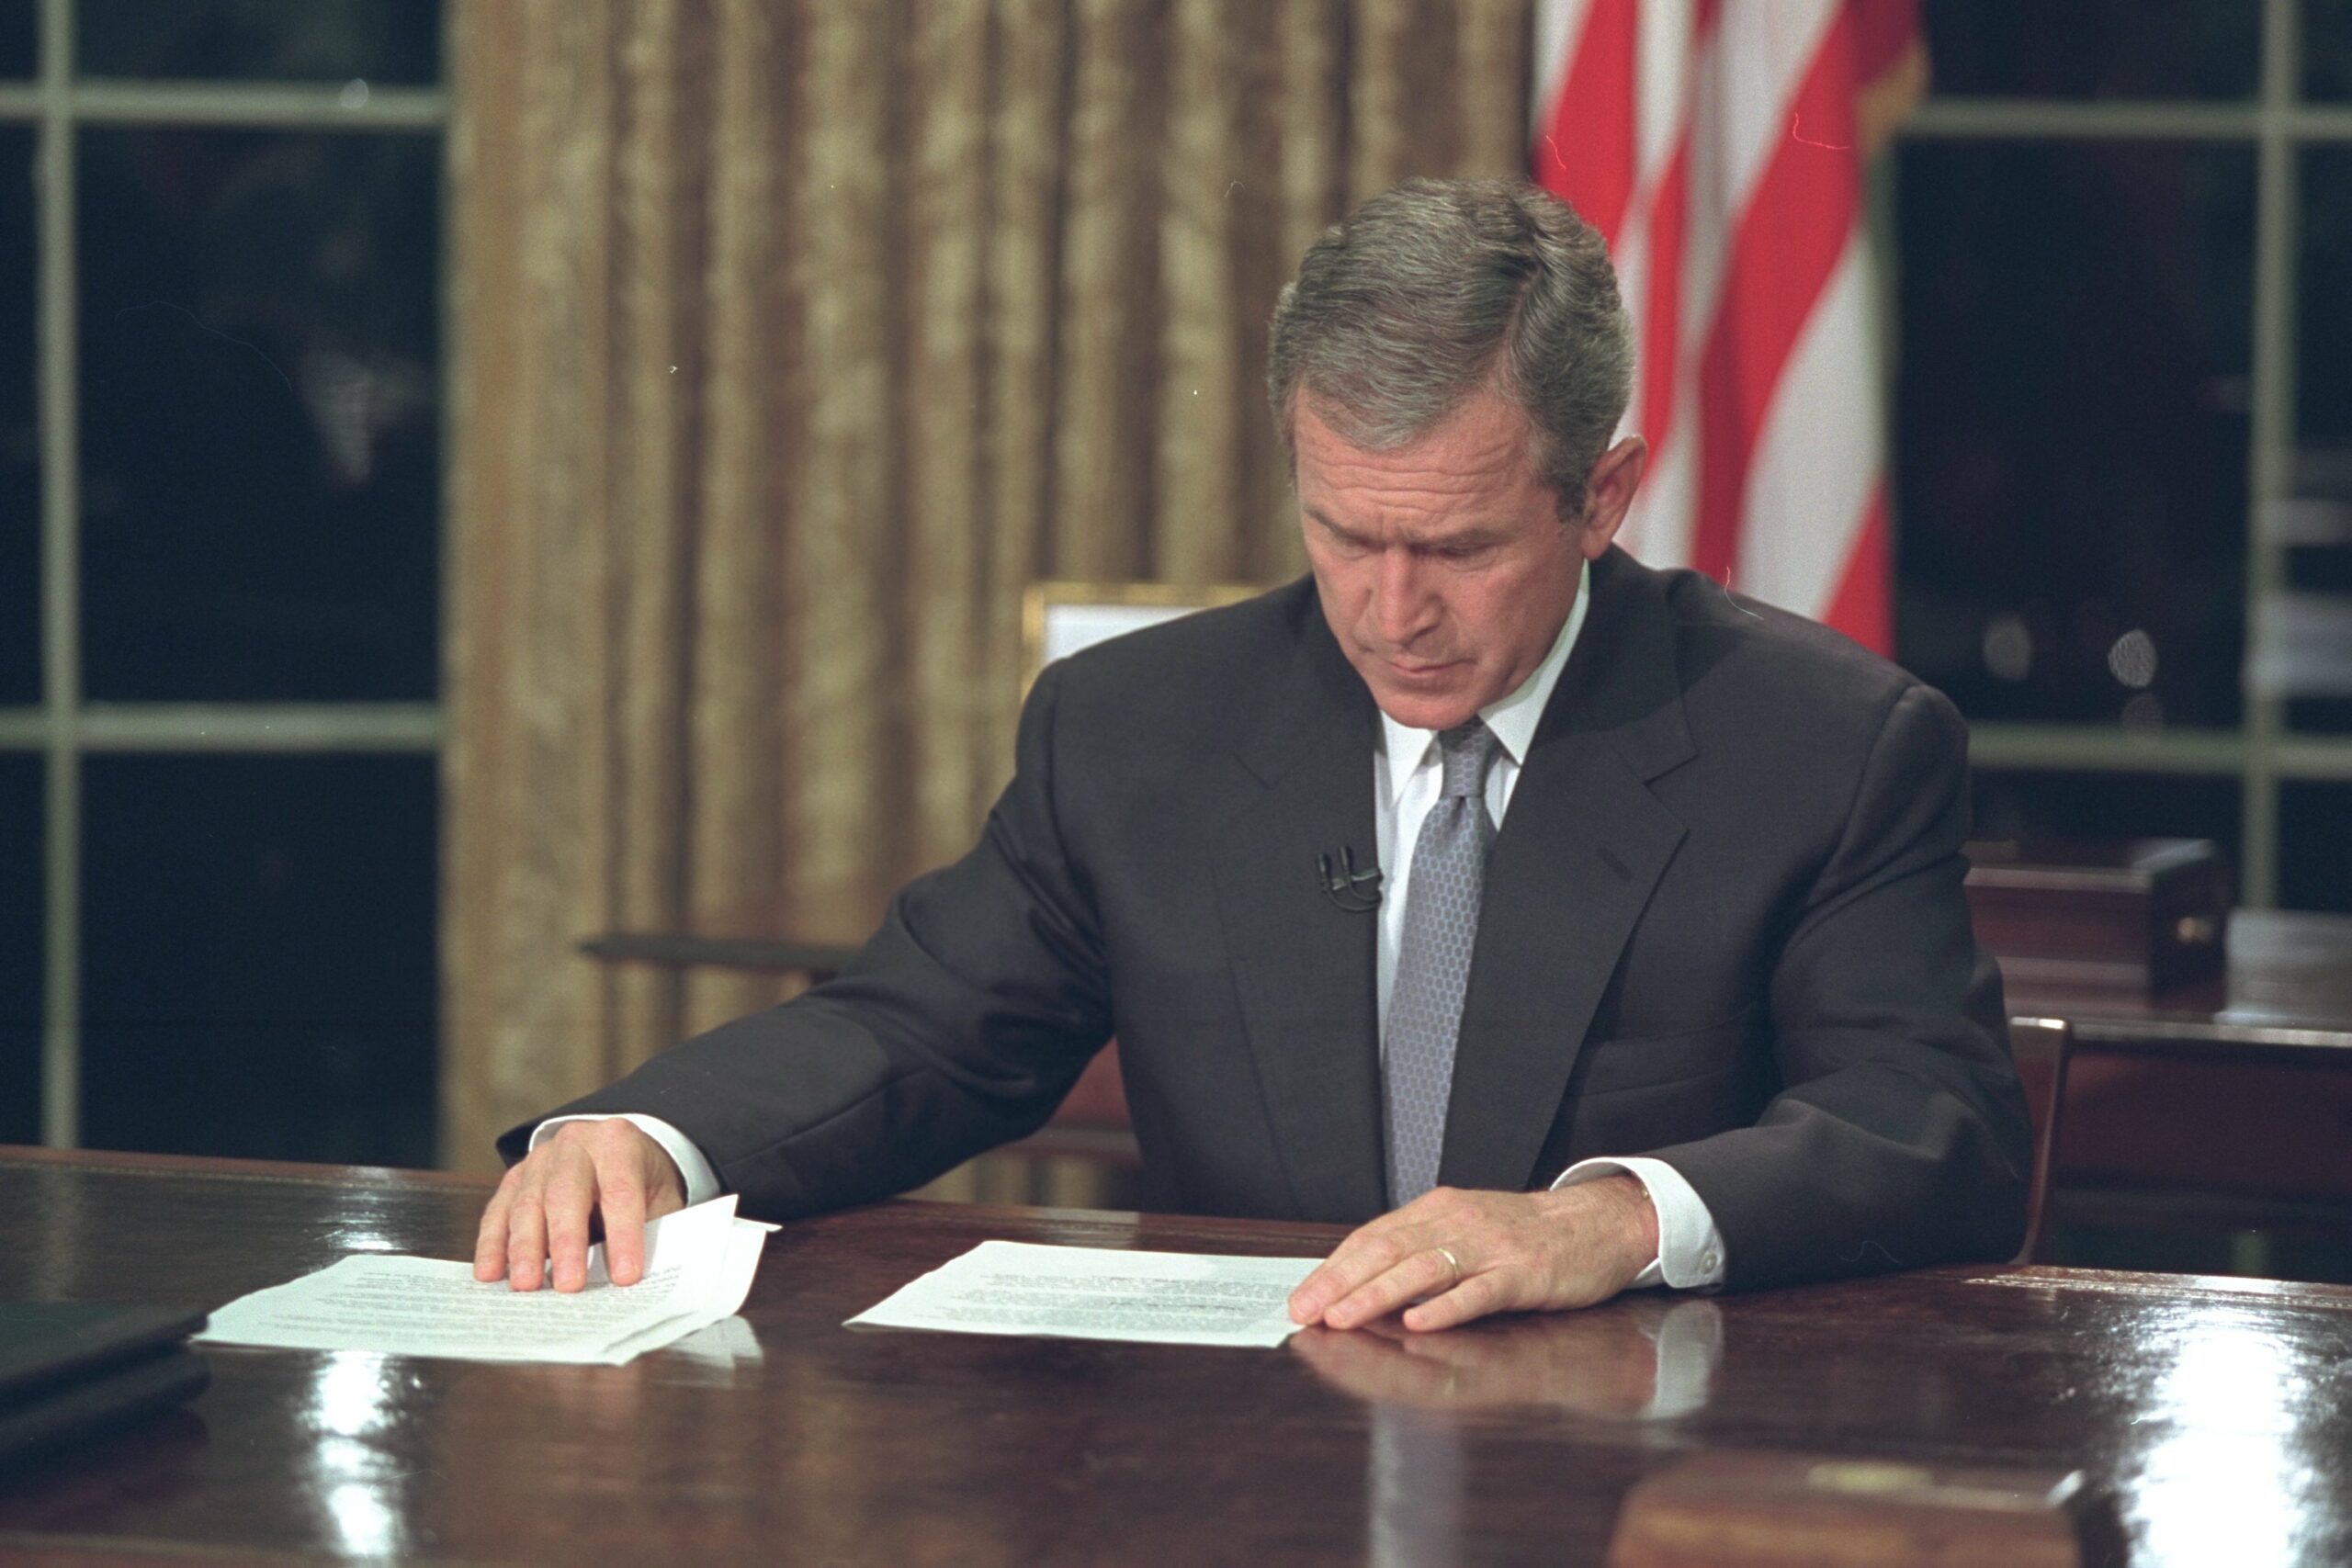 George W. Bush, promoter of the Bush Doctrine